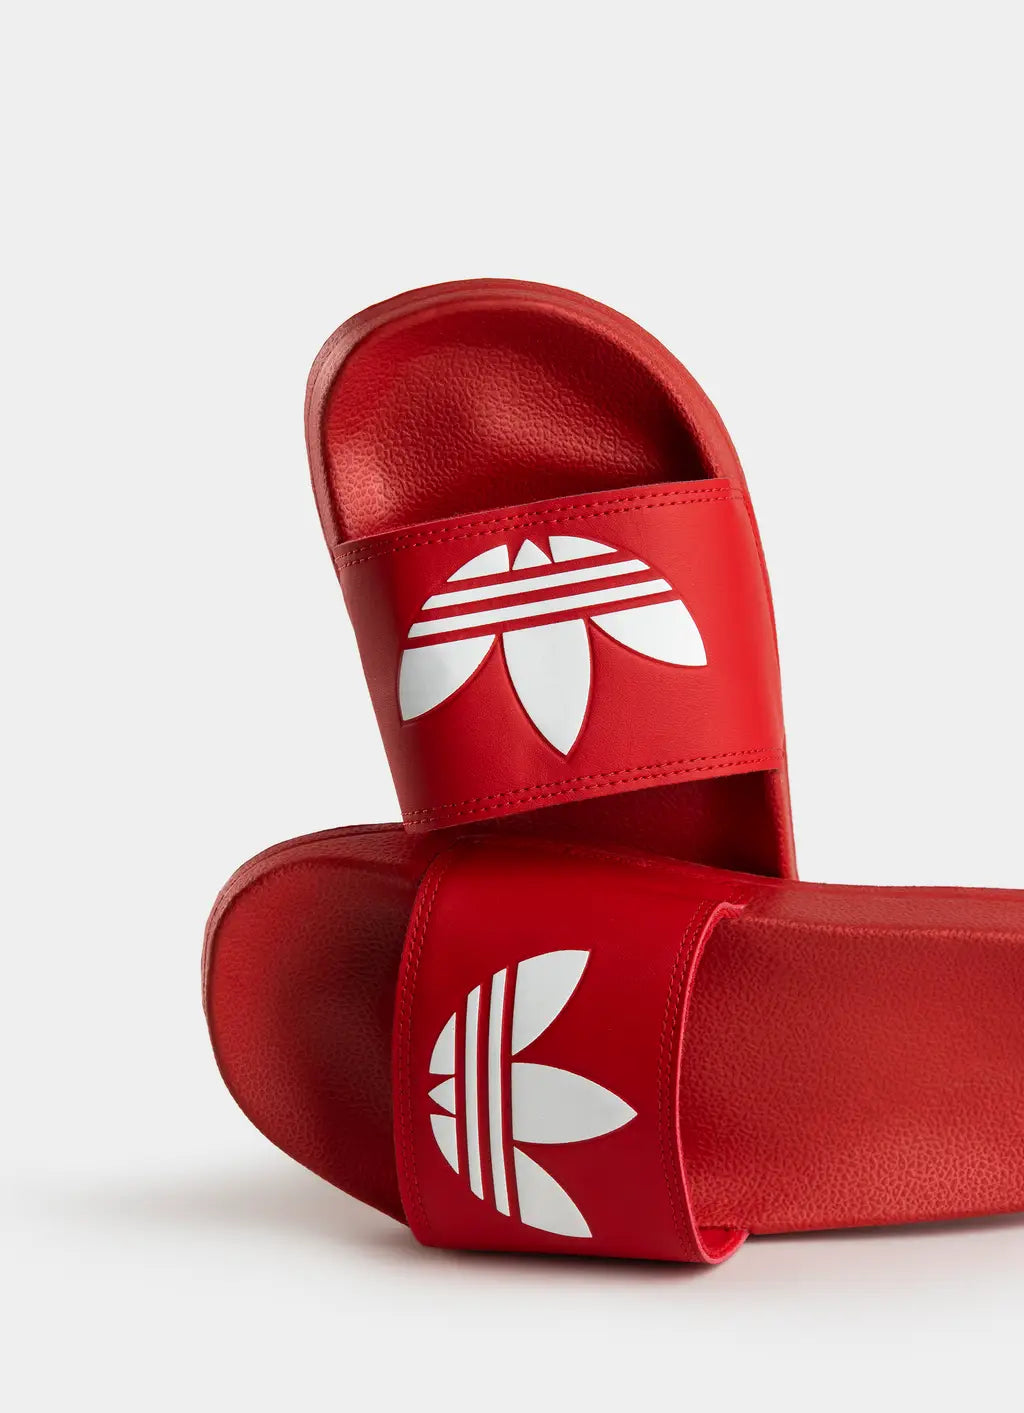 .Adidas Originals Adilette Slides/Jandals - Unisex - Red/White - (FU8296) - LAL - R2L14